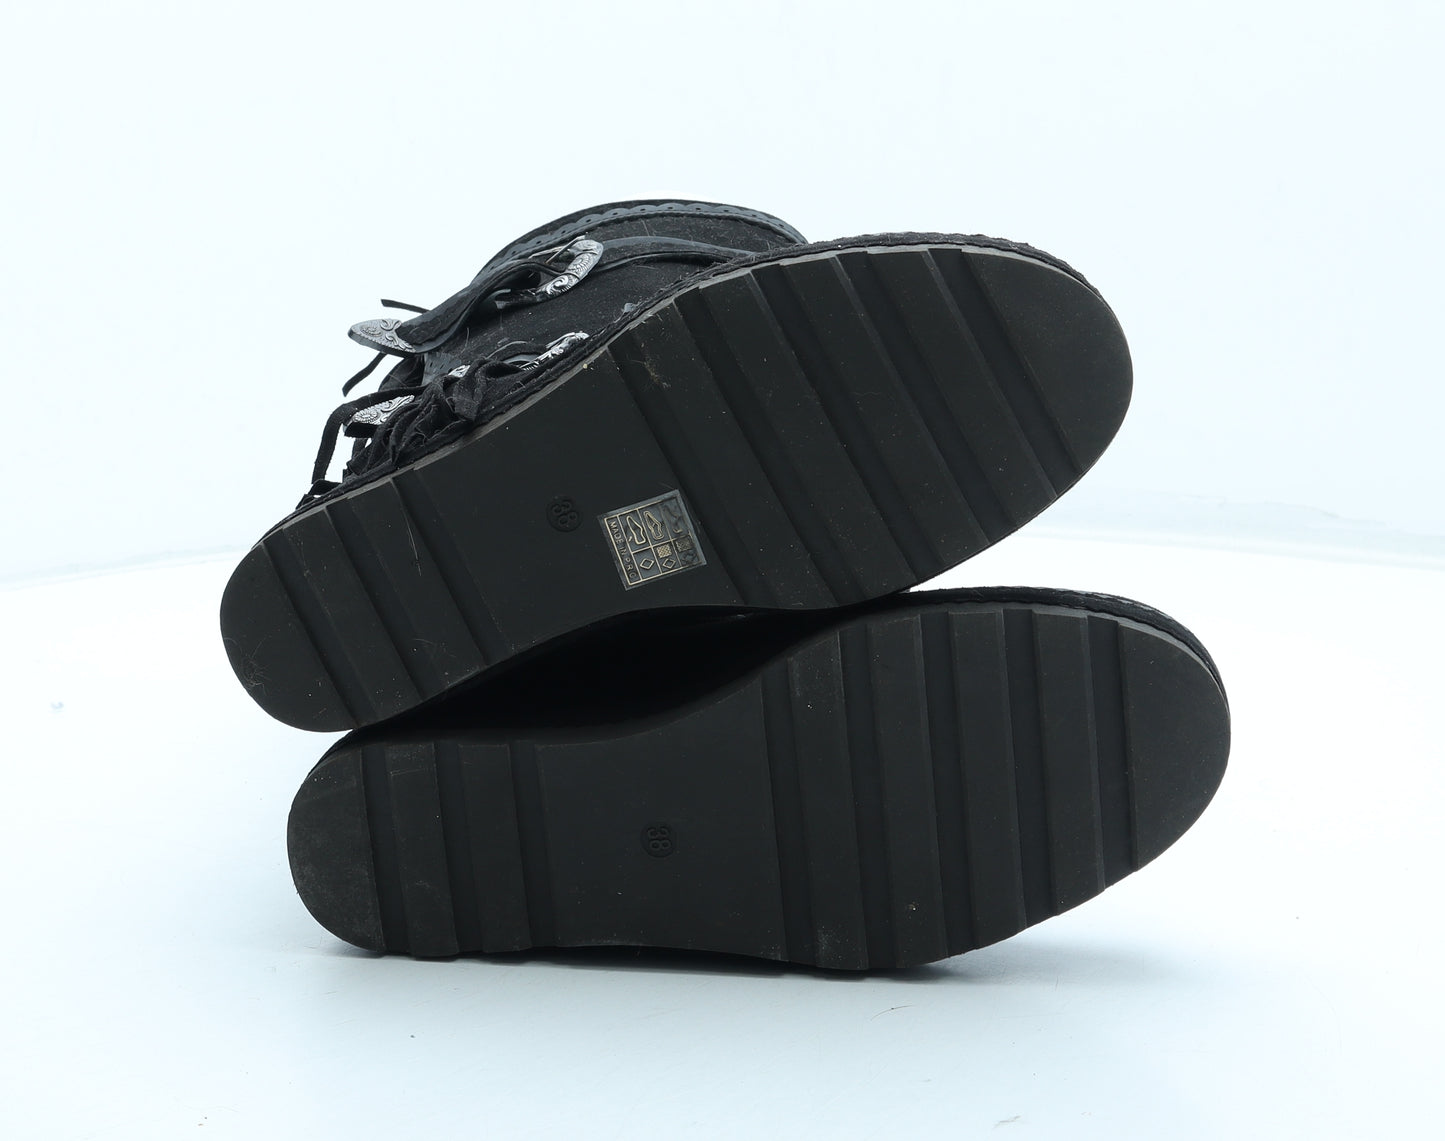 Mulanka Womens Black Leather Bootie Boot UK